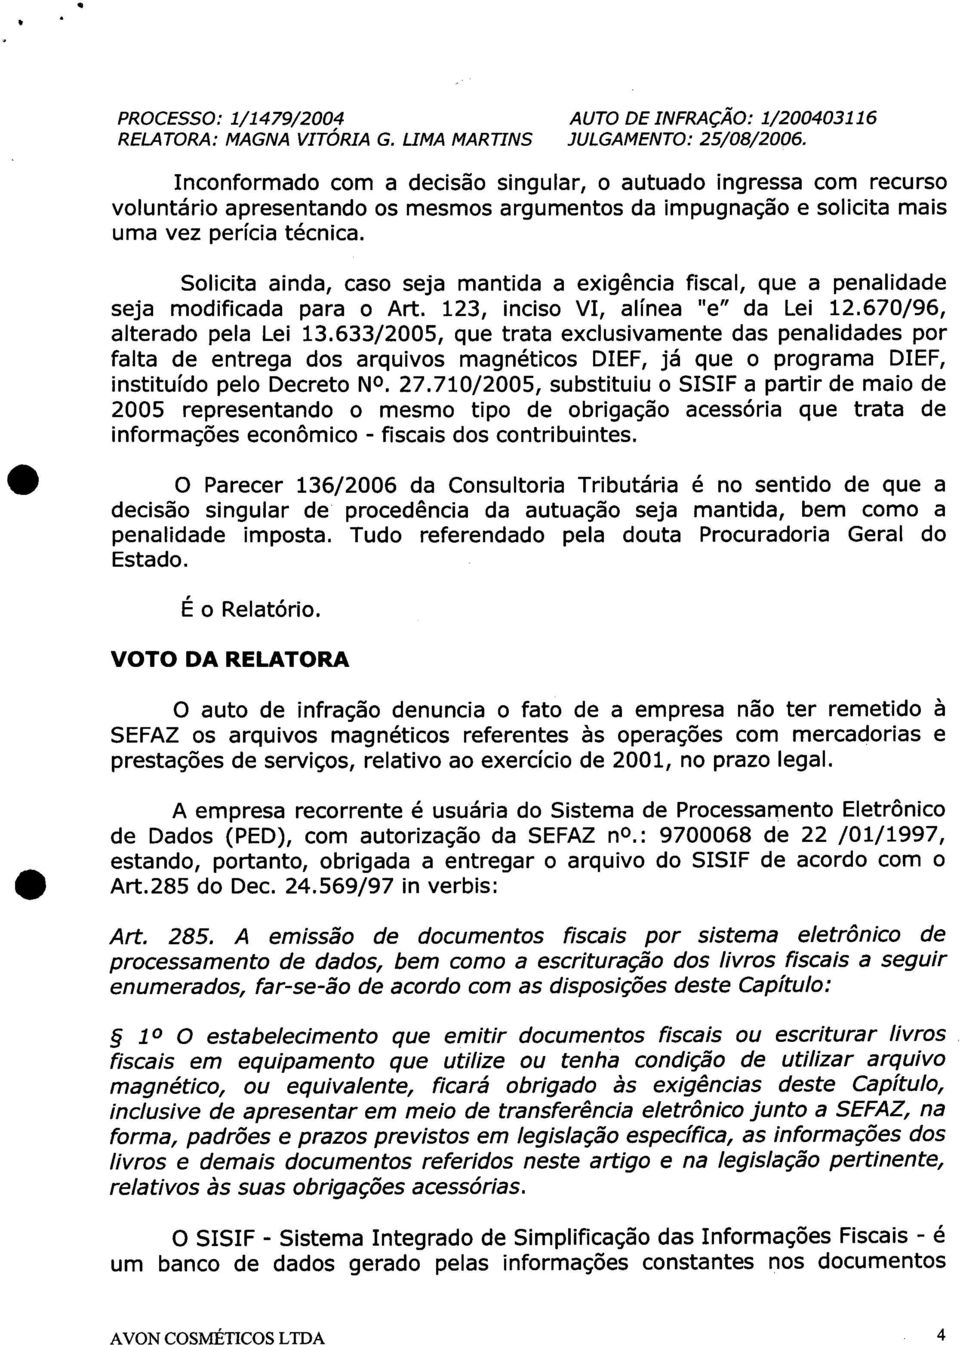 633/2005, que trata exclusivamente das penalidades por falta de entrega dos arquivos magnéticos DIEF, já que o programa DIEF, instituído pelo Decreto NO. 27.